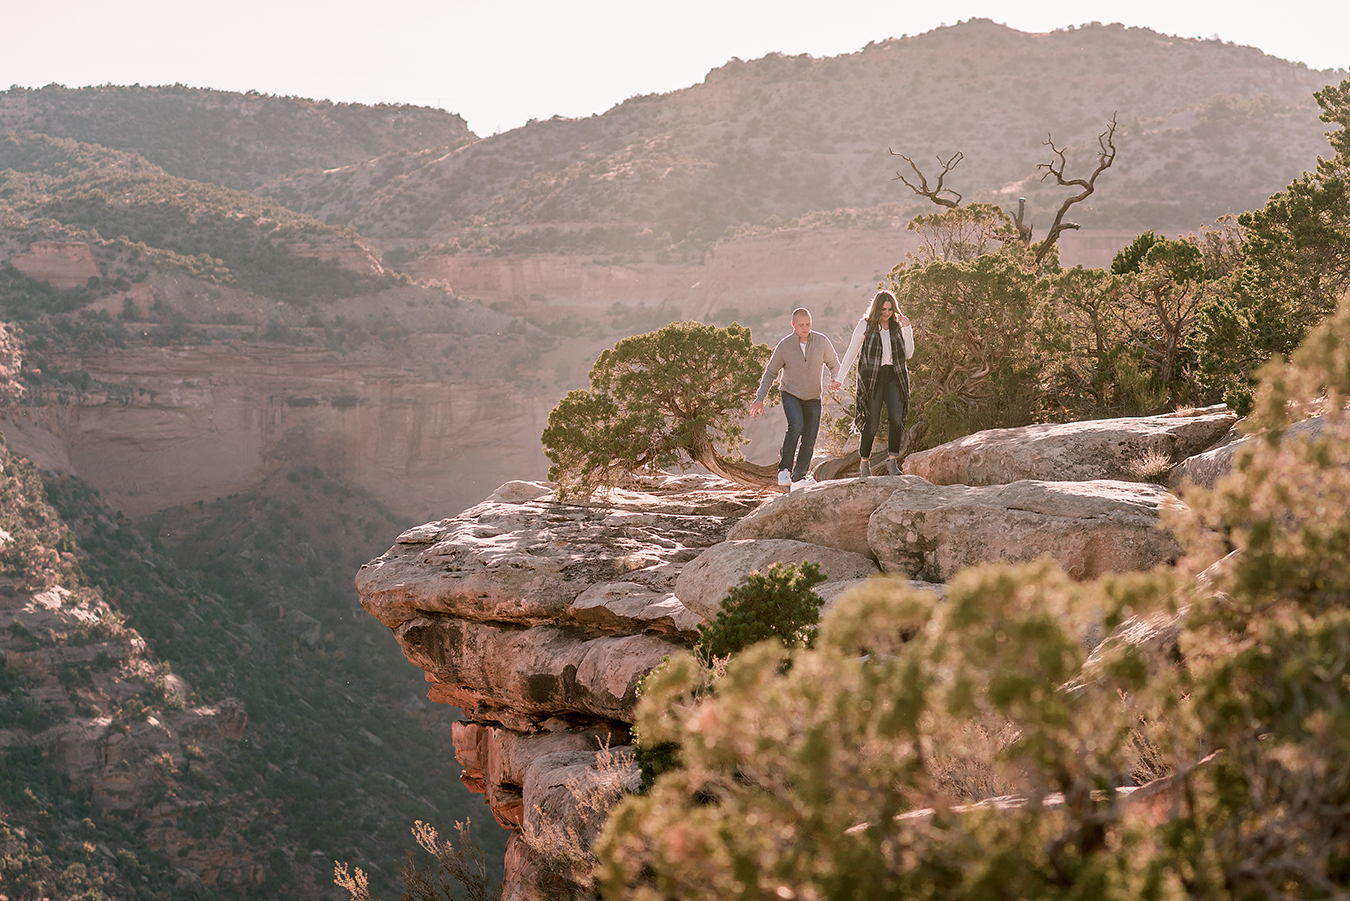 Trenton & Jamie's Engagement on the Colorado National Monument | amanda.matilda.photography